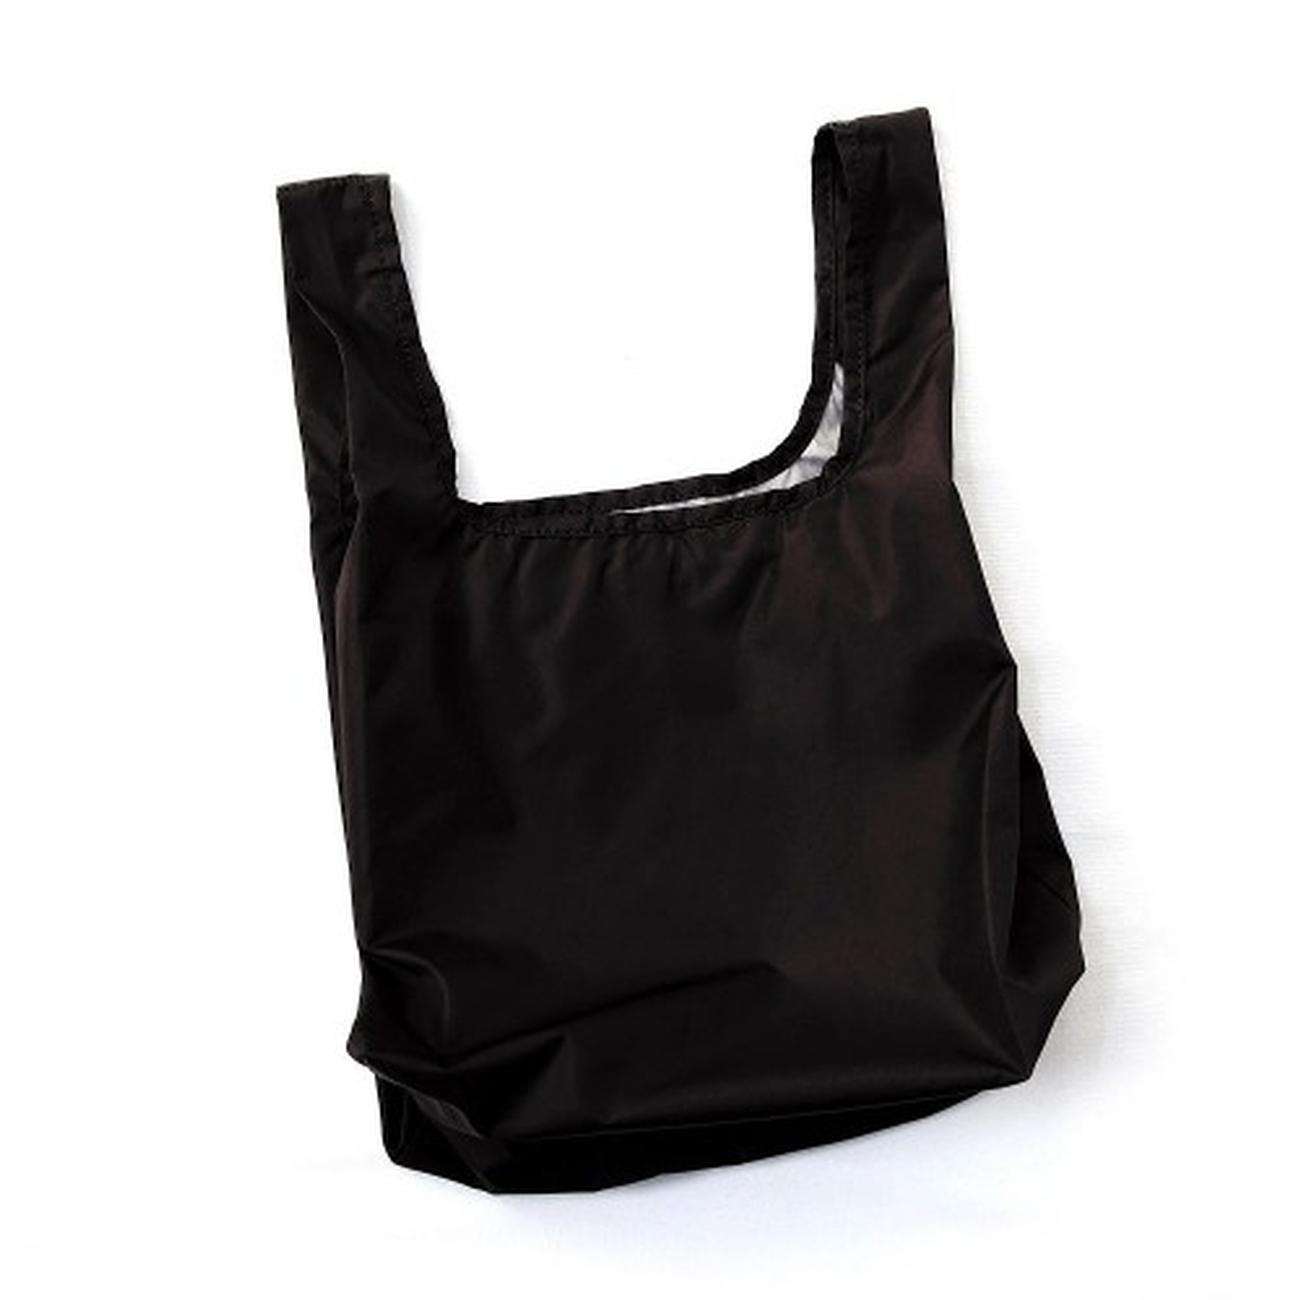 Kind Bag Mini Space Black